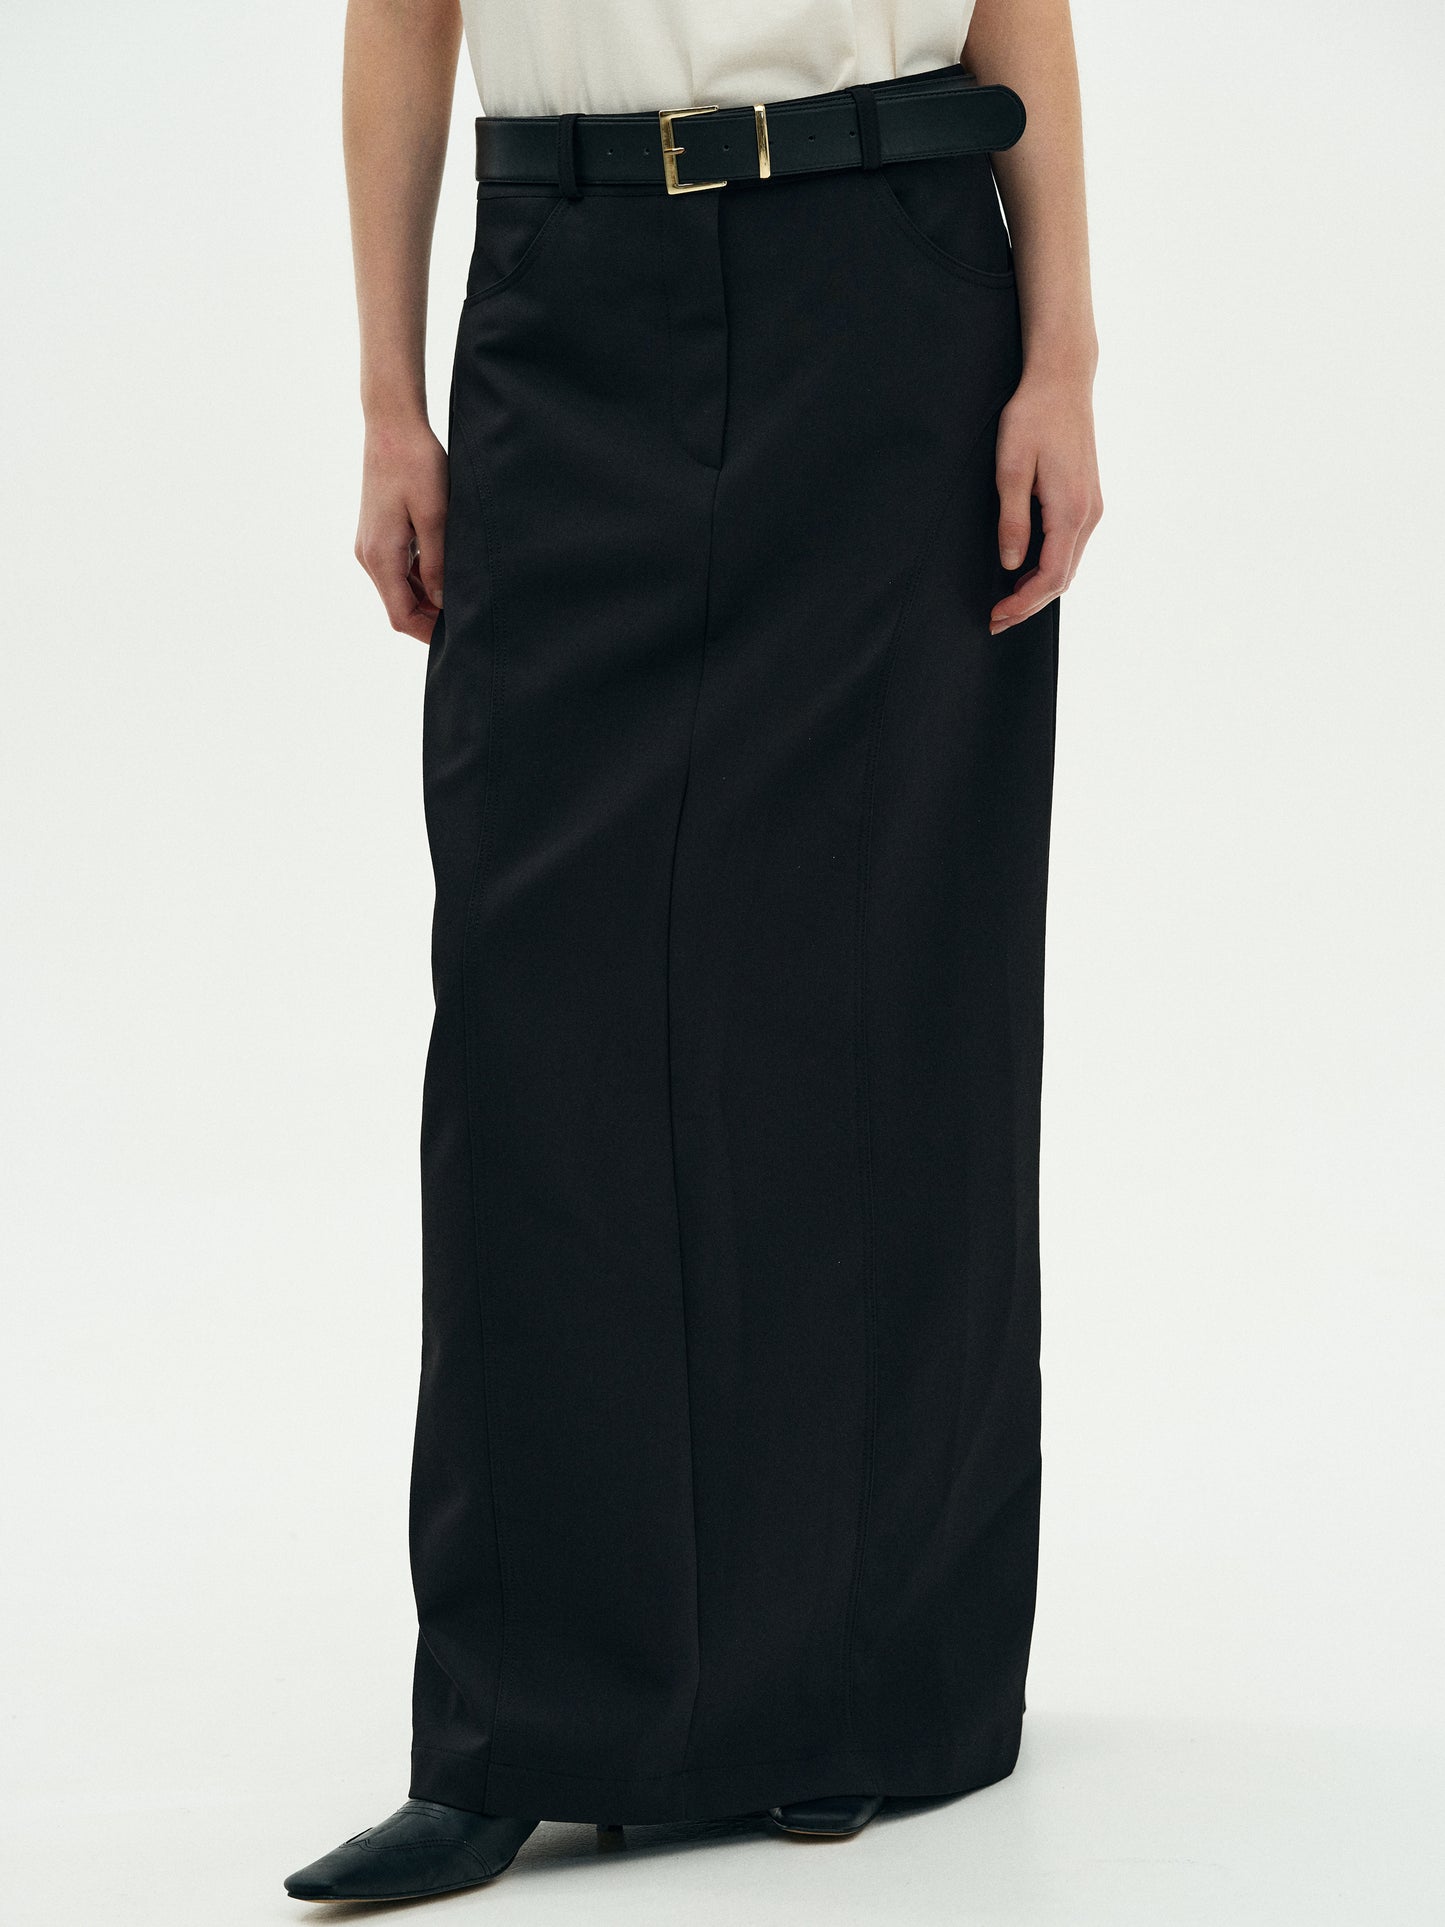 Long Pencil Skirt, Black